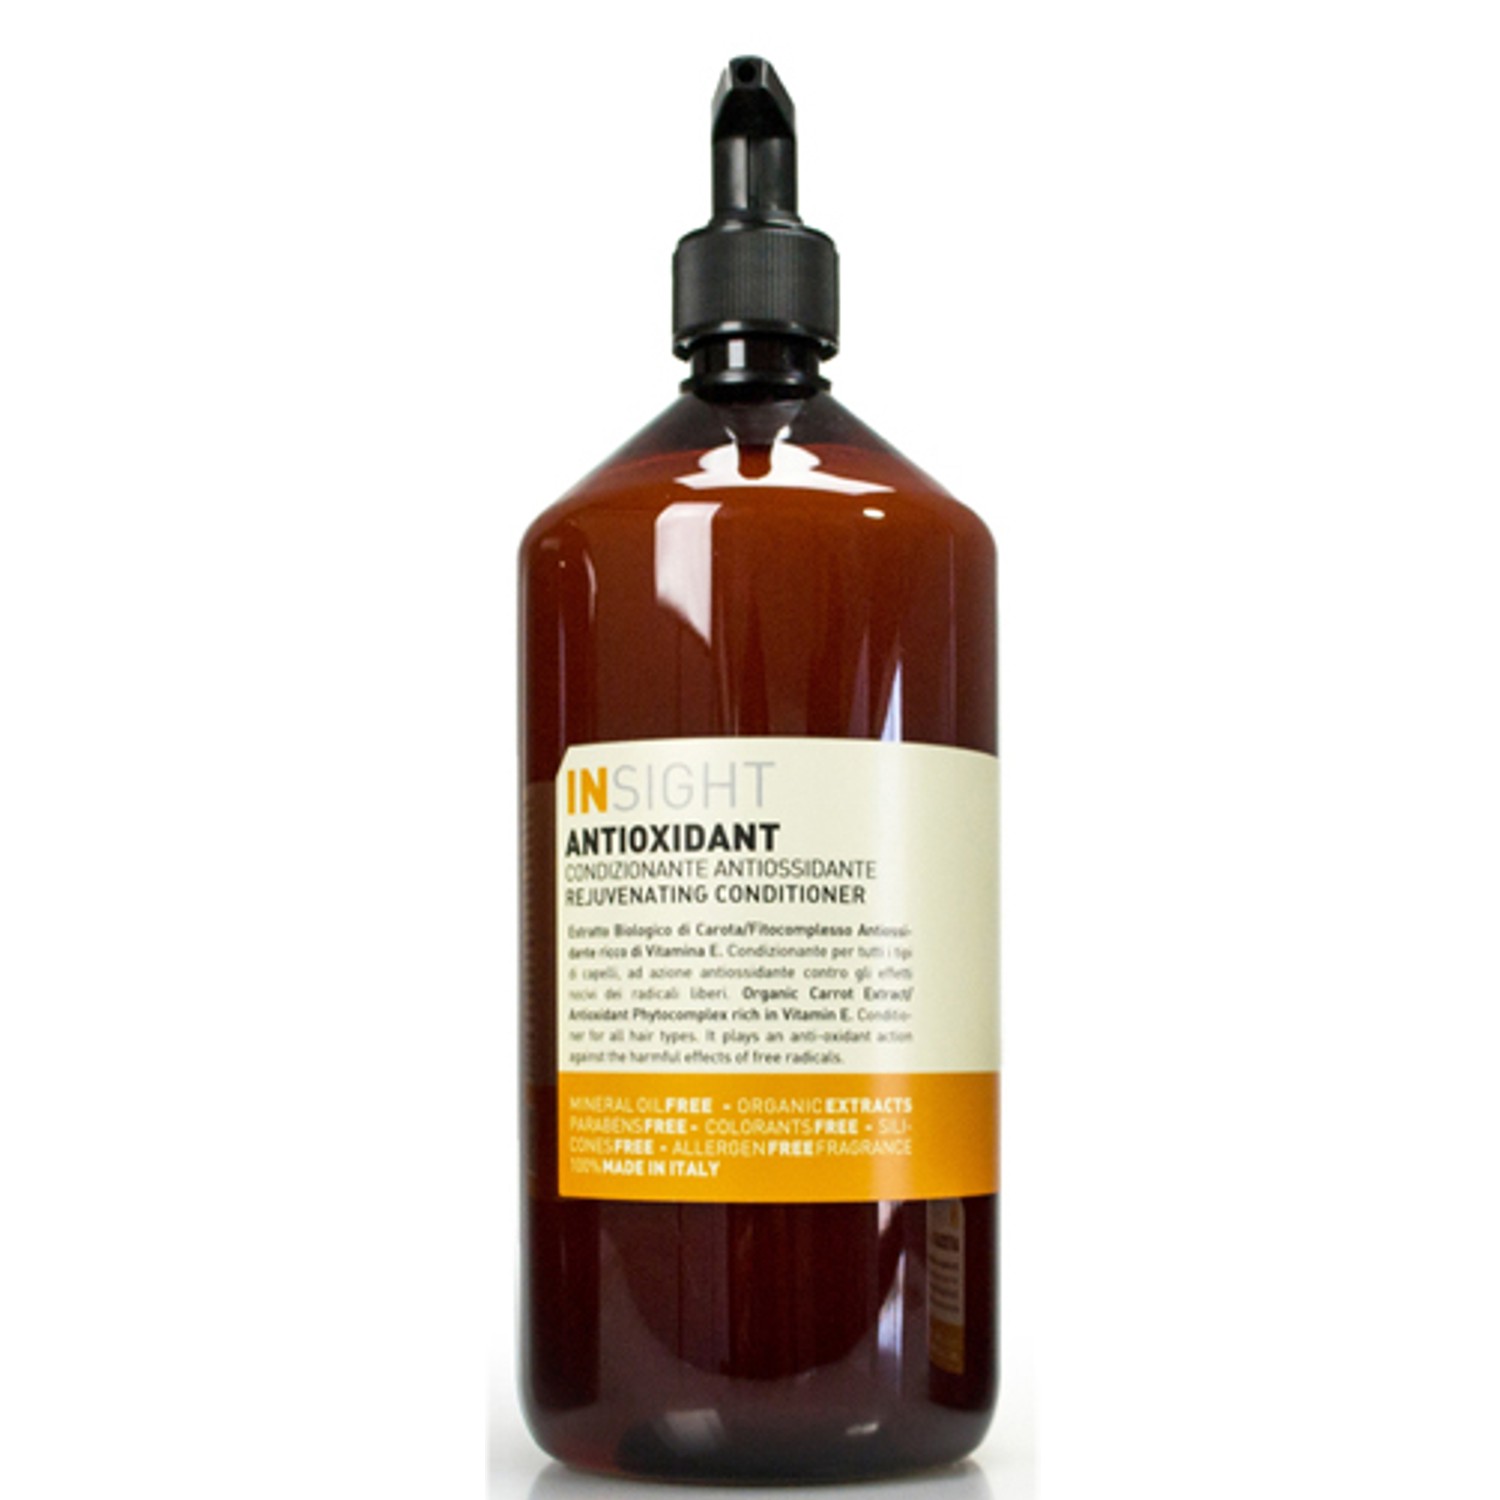 INSIGHT Antioxidant Rejuvenating Conditioner 900 ml